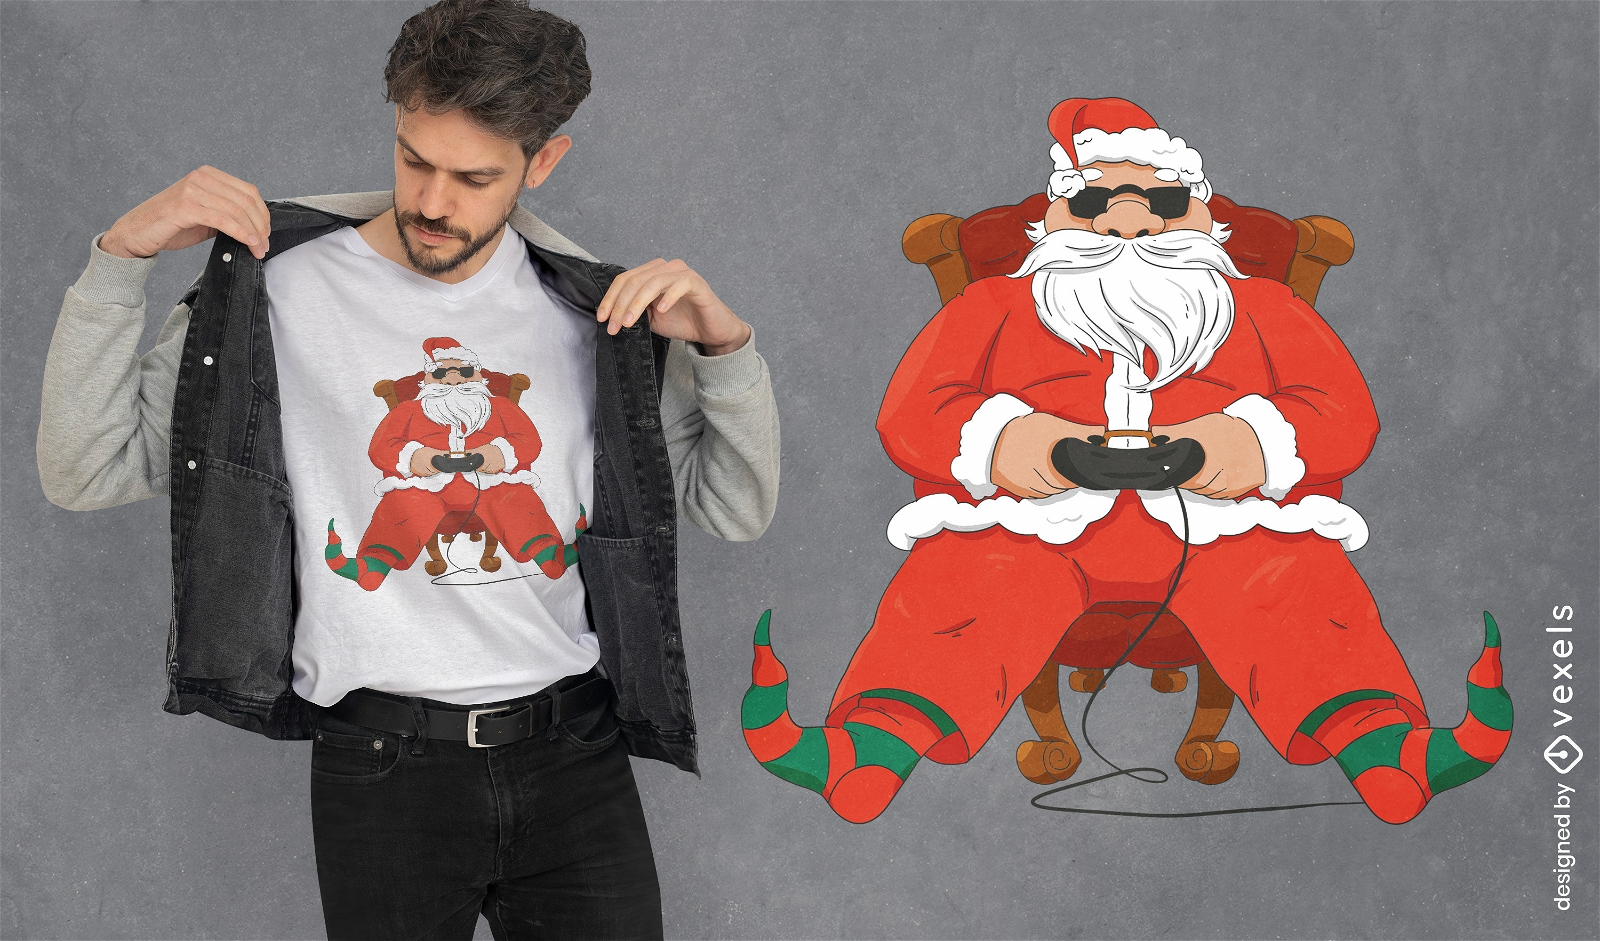 Gamer santa t-shirt design